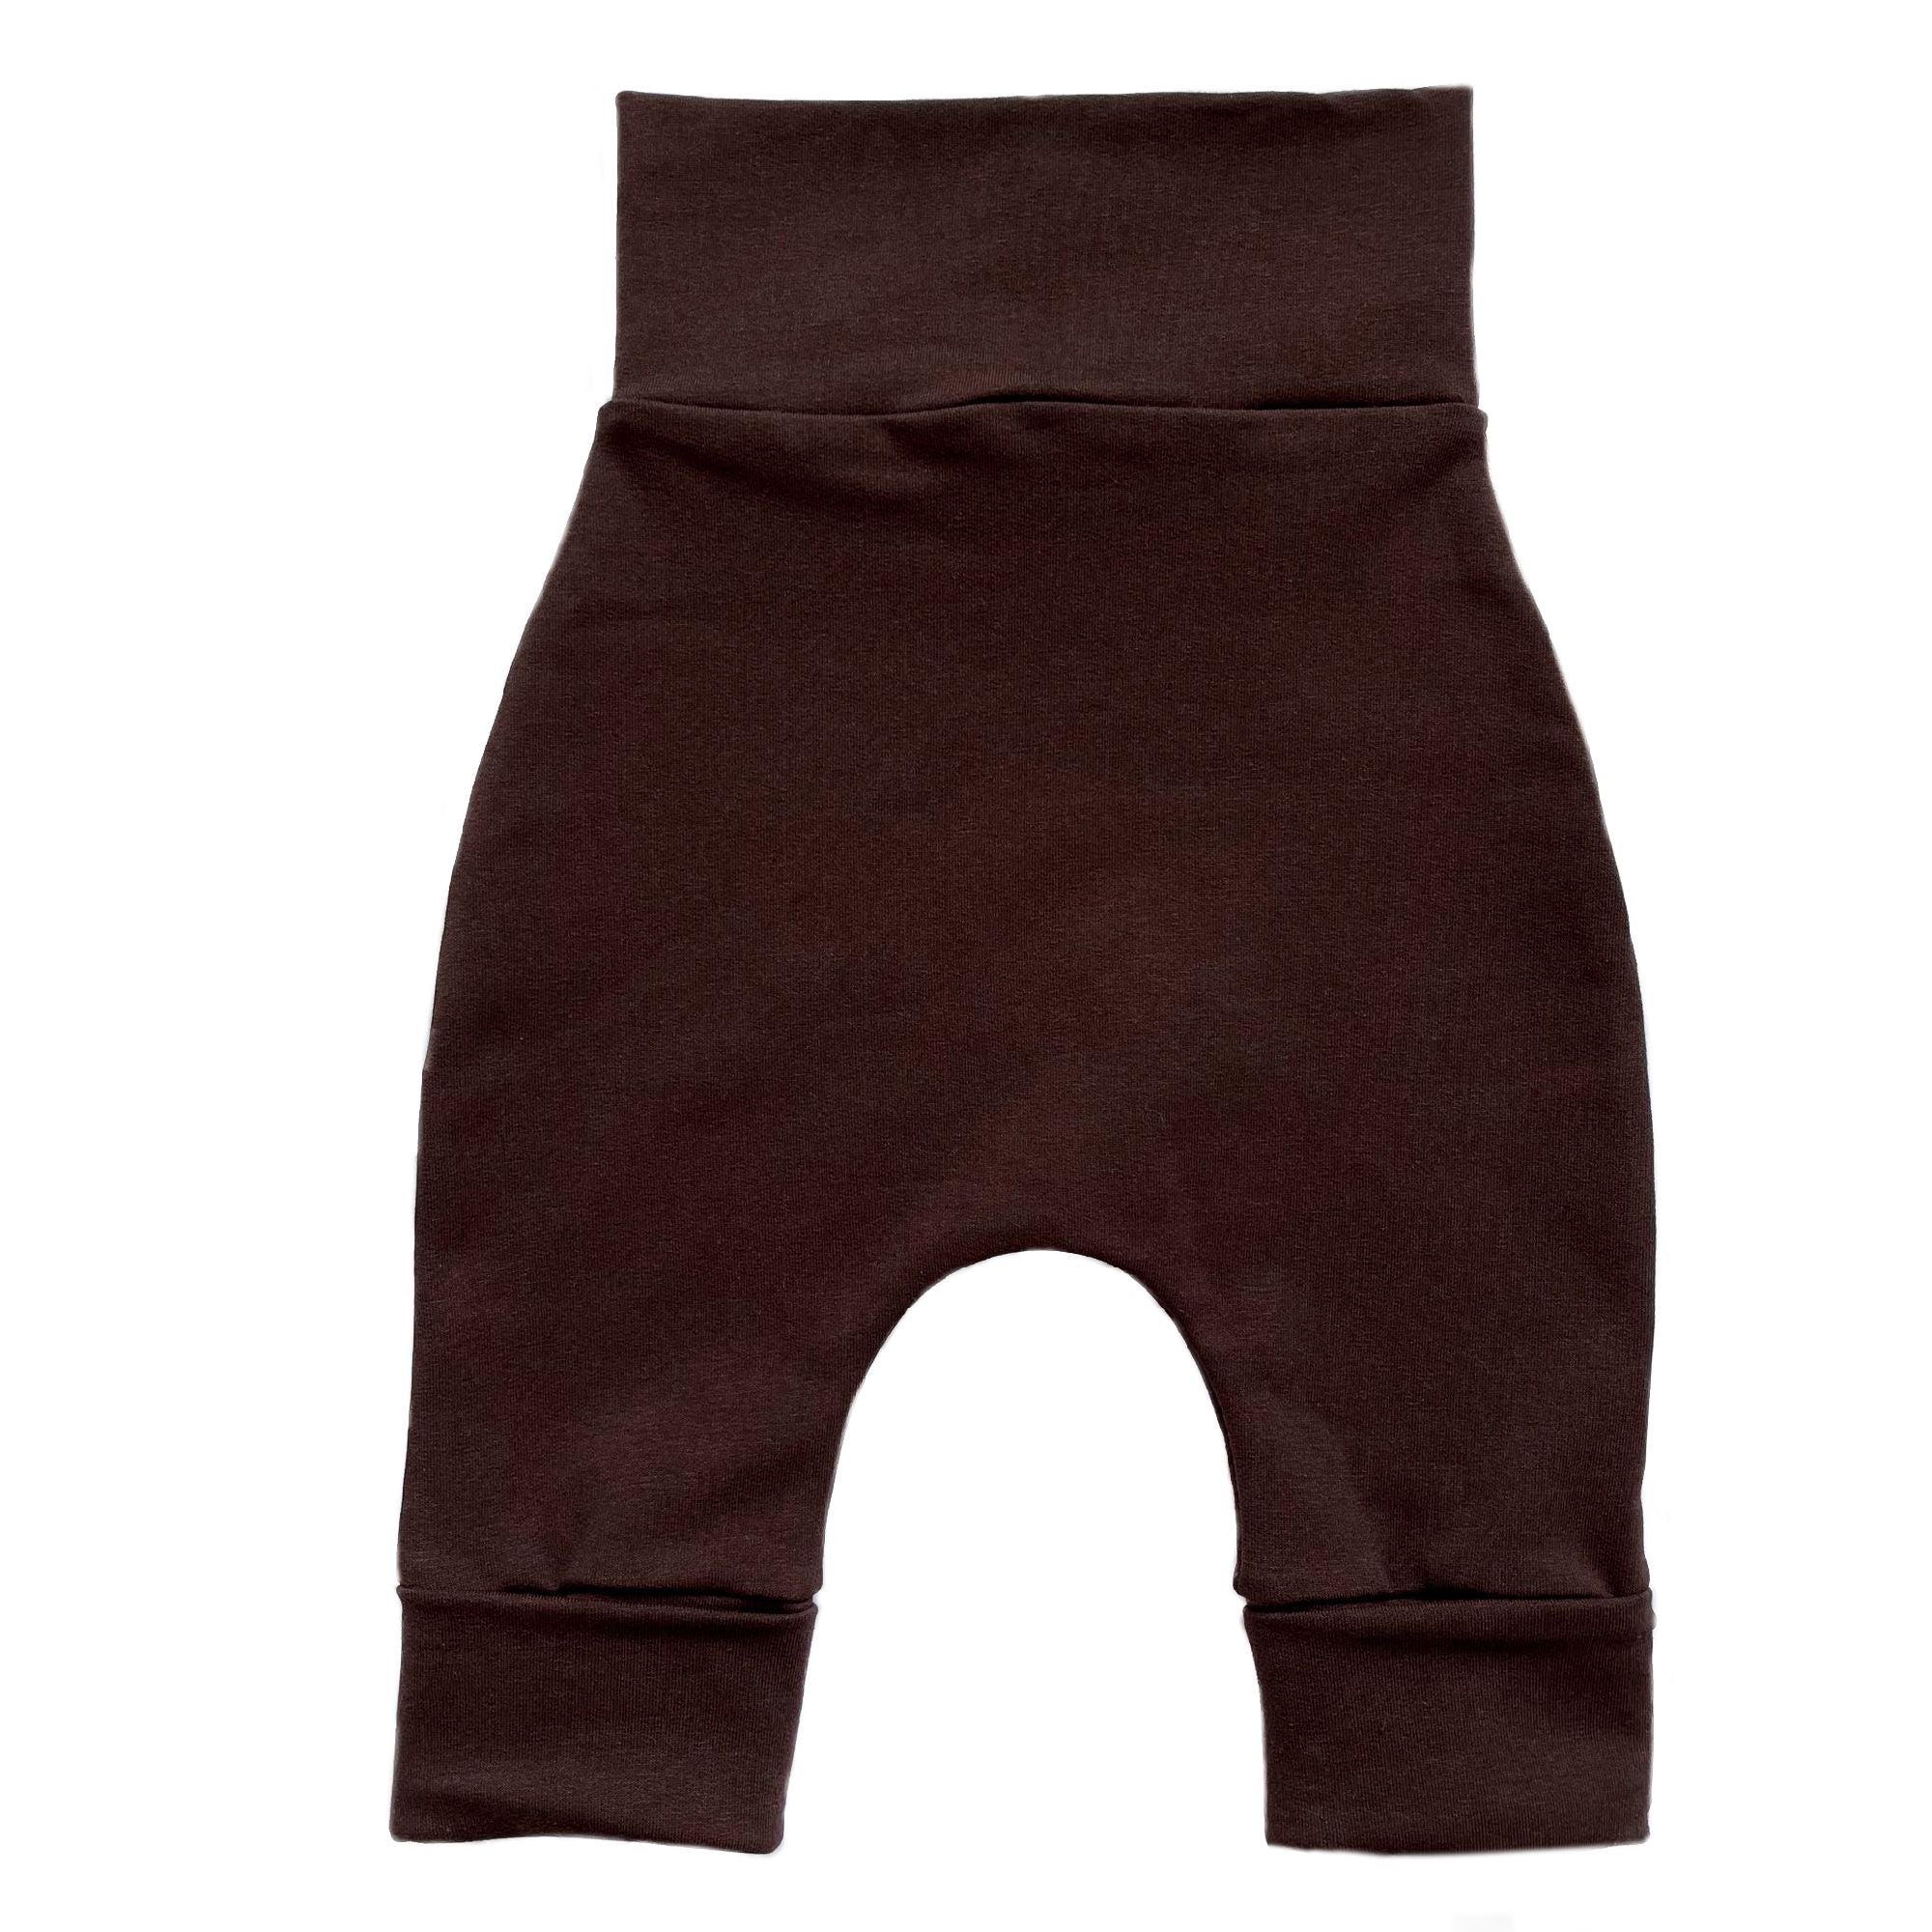 Pantalon évolutif bébés et enfants-Marron